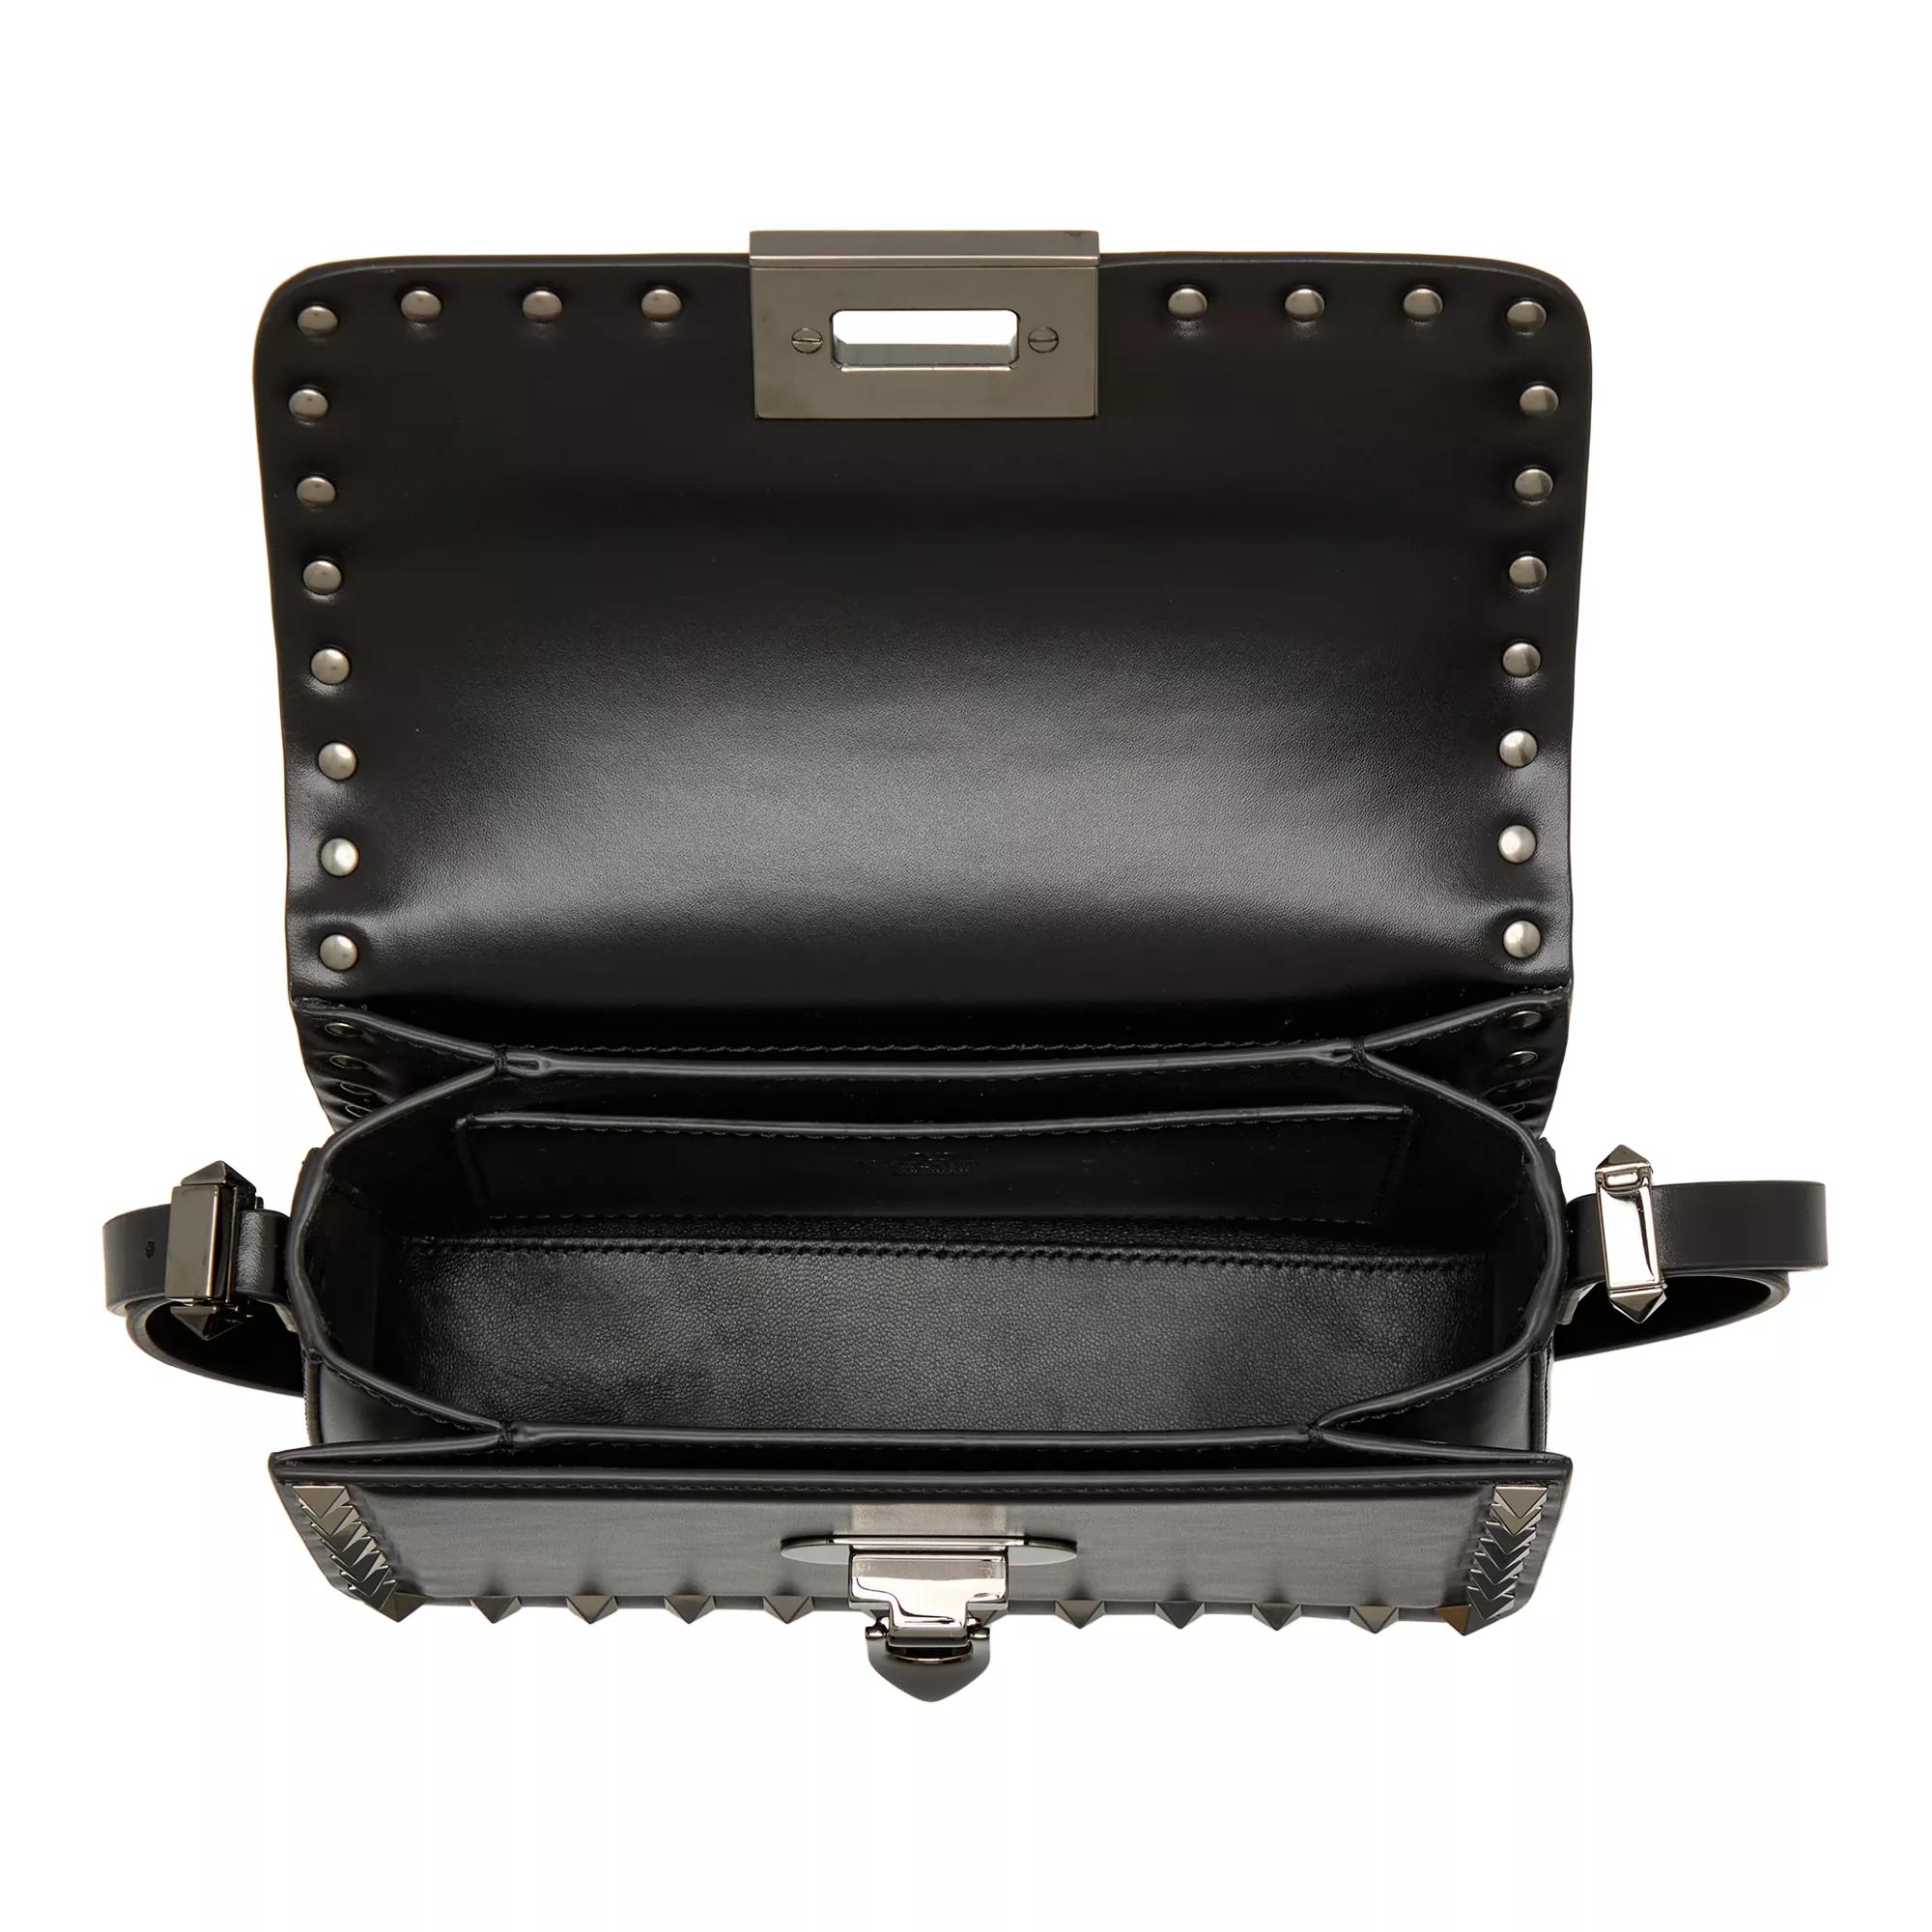 Valentino Garavani Hobo bags Small Rockstud Shoulder Bag in zwart